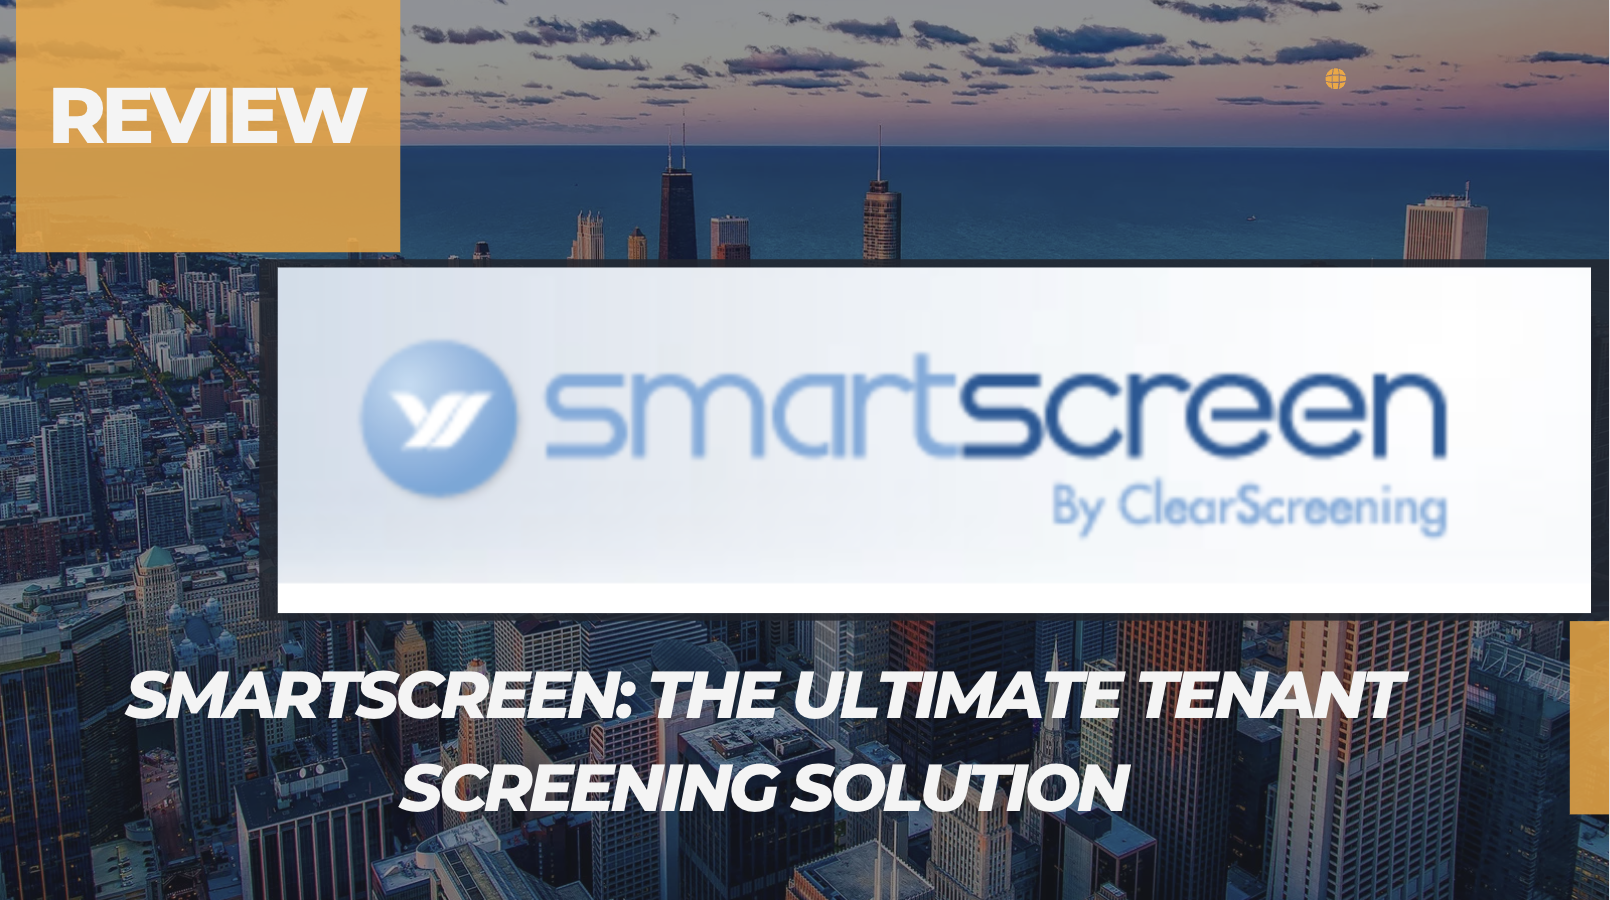 SmartScreen: The Ultimate Tenant Screening Solution